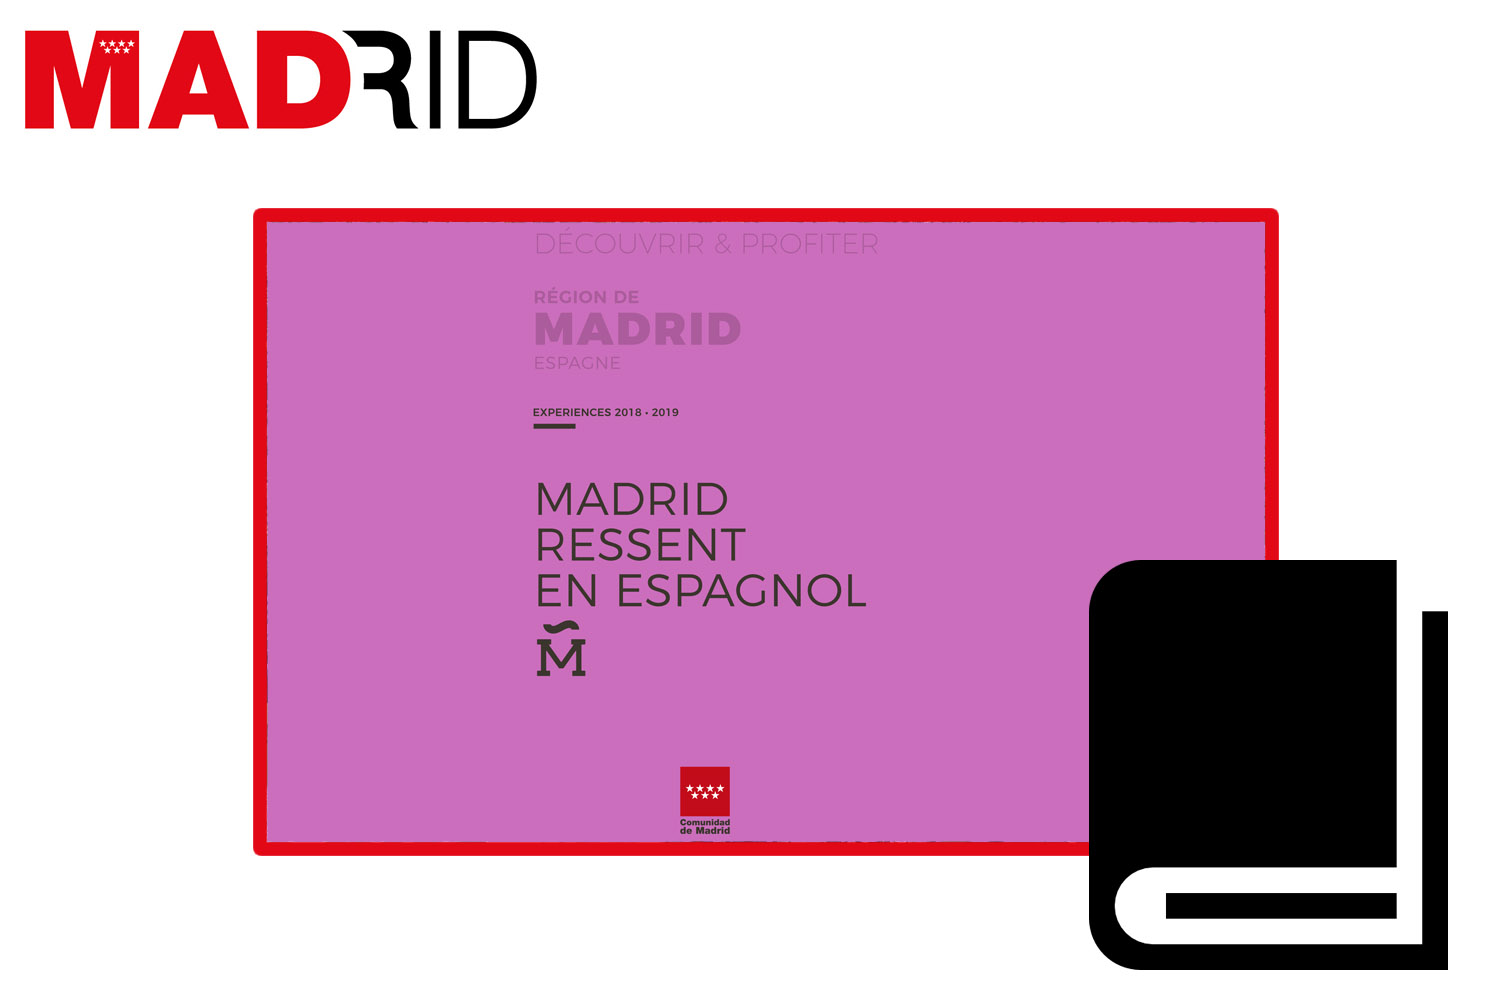 Madrid Ressent en Espagnol